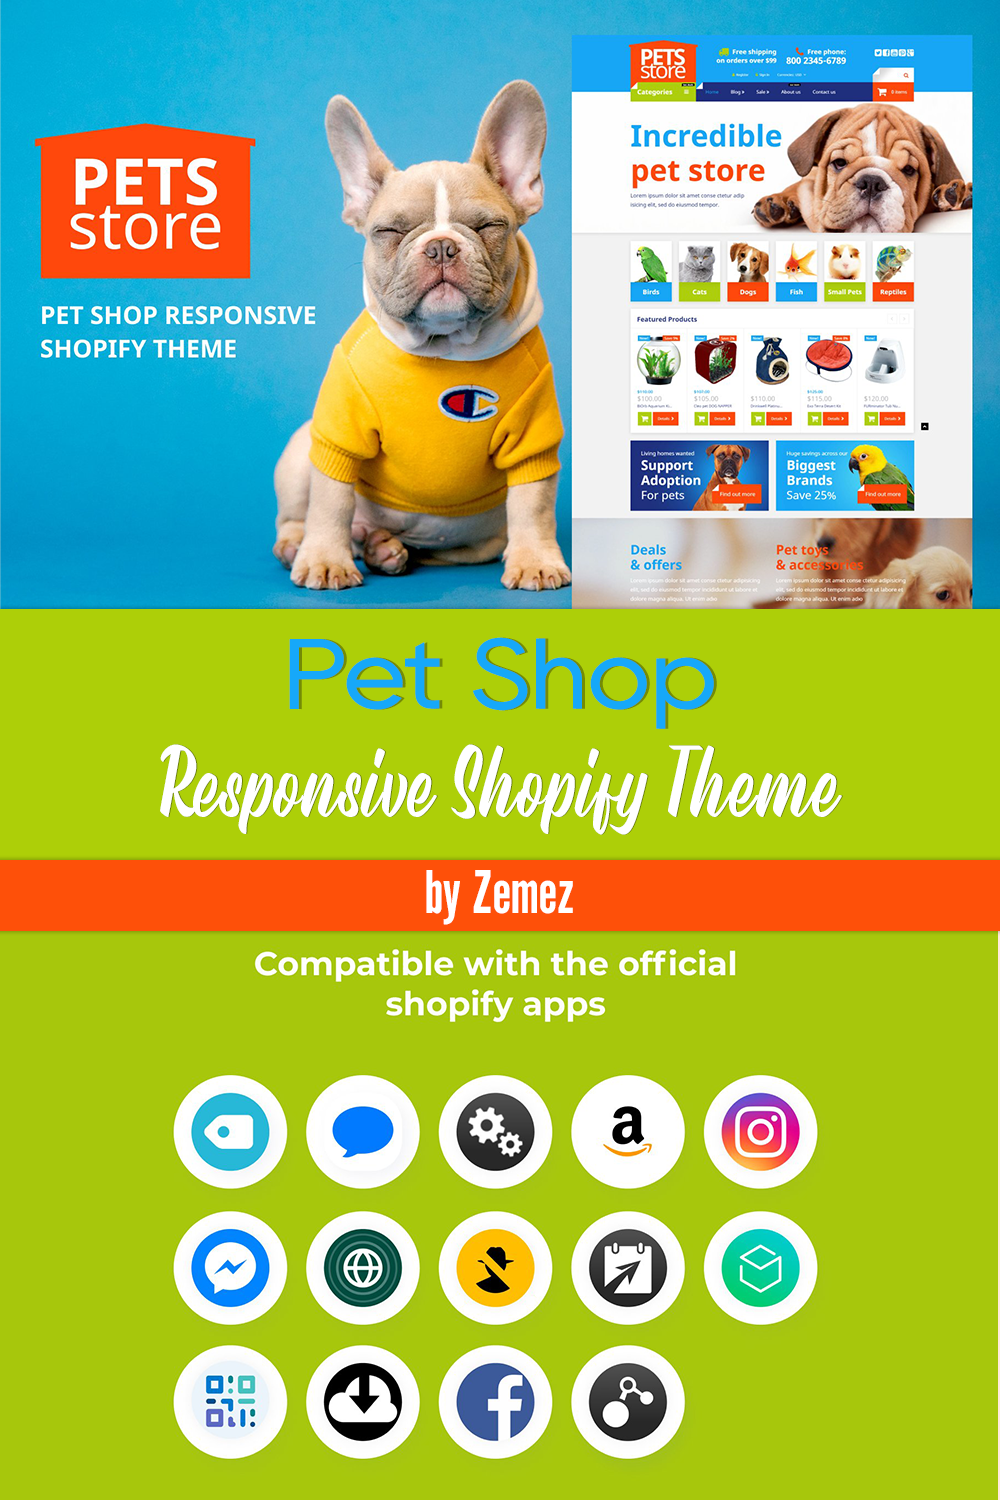 Pet shop responsive shopify theme of pinterest.